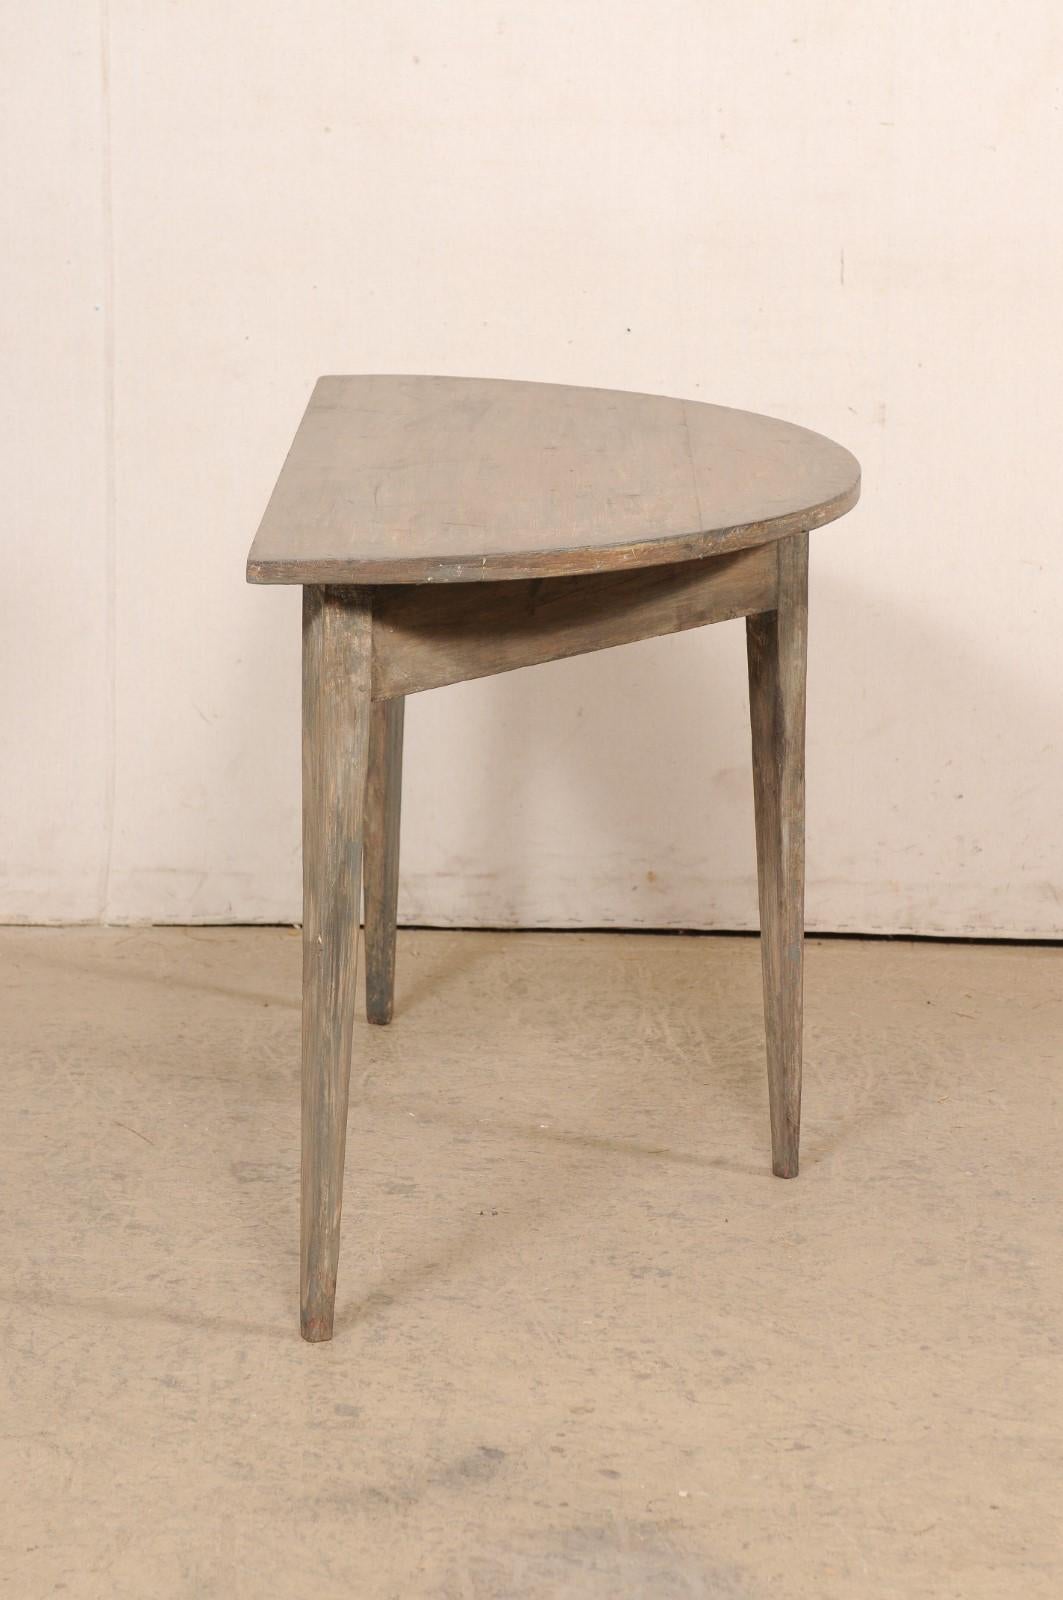 Wood Swedish Demi-Lune Table w/Scraped Finish, Turn of 19th & 20th C. For Sale